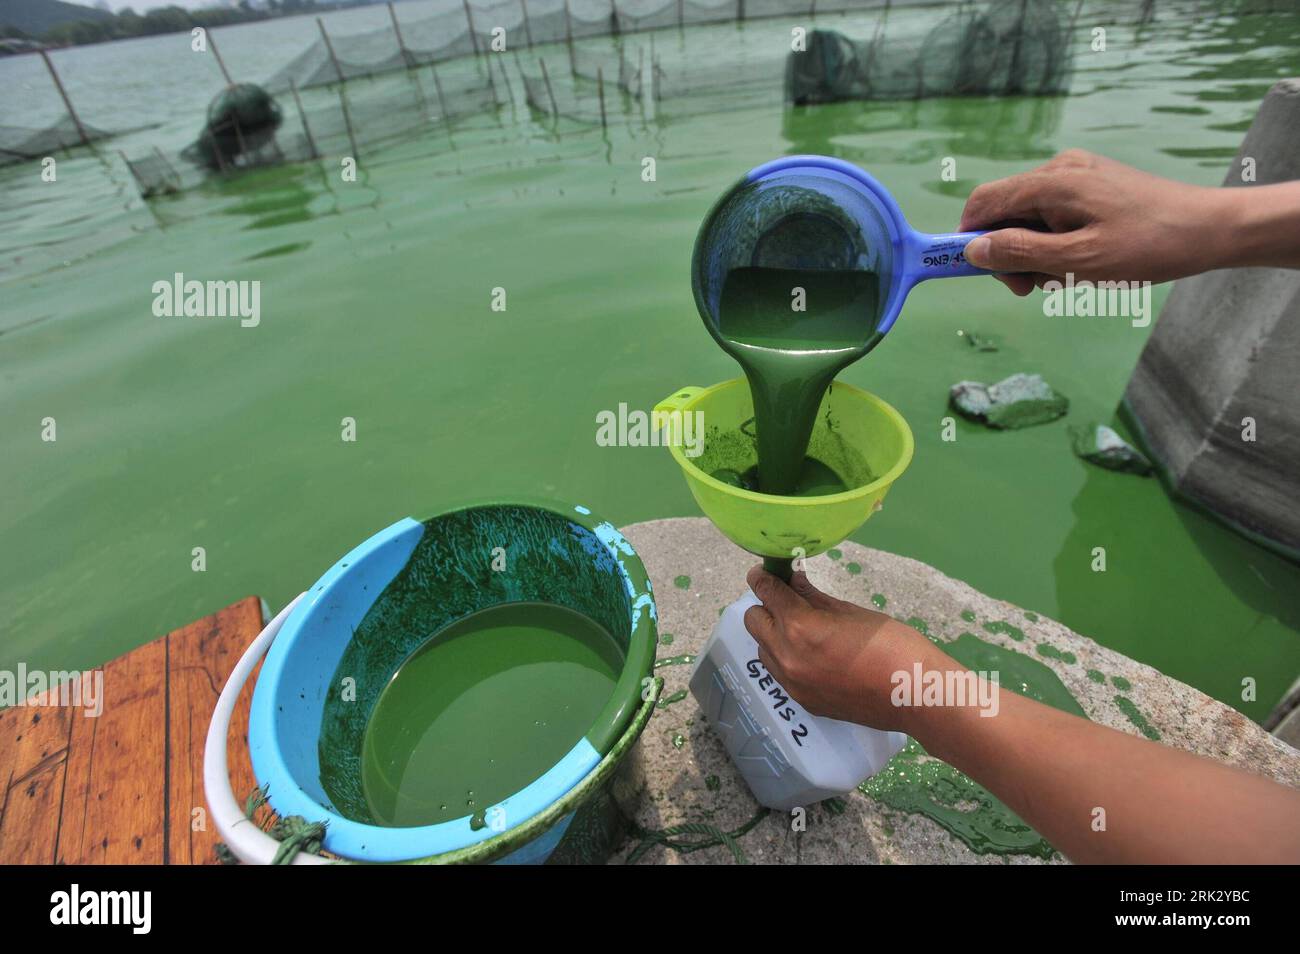 Bildnummer: 53268085  Datum: 17.08.2009  Copyright: imago/Xinhua (090817) -- WUHAN, Aug. 17, 2009 (Xinhua) -- An environment monitoring staff collects water sample of a lake polluted by cyanophyta algal in Wuhan, capital city of central China s Hubei Province, Aug. 17, 2009. Local environment authority is monitoring the lake water to prevent the spread of pollution. (Xinhua) (xxh) (2)CHINA-WUHAN-POLLUTION (CN)  PUBLICATIONxNOTxINxCHN  Fotostory blaugrüne Algen Alge Algenblüte Verschmutzung Wasserverschmutzung Gewässer premiumd Highlight kbdig xsk  2009 quer o0 Probe, Wasserprobe, wasser    Bil Stock Photo